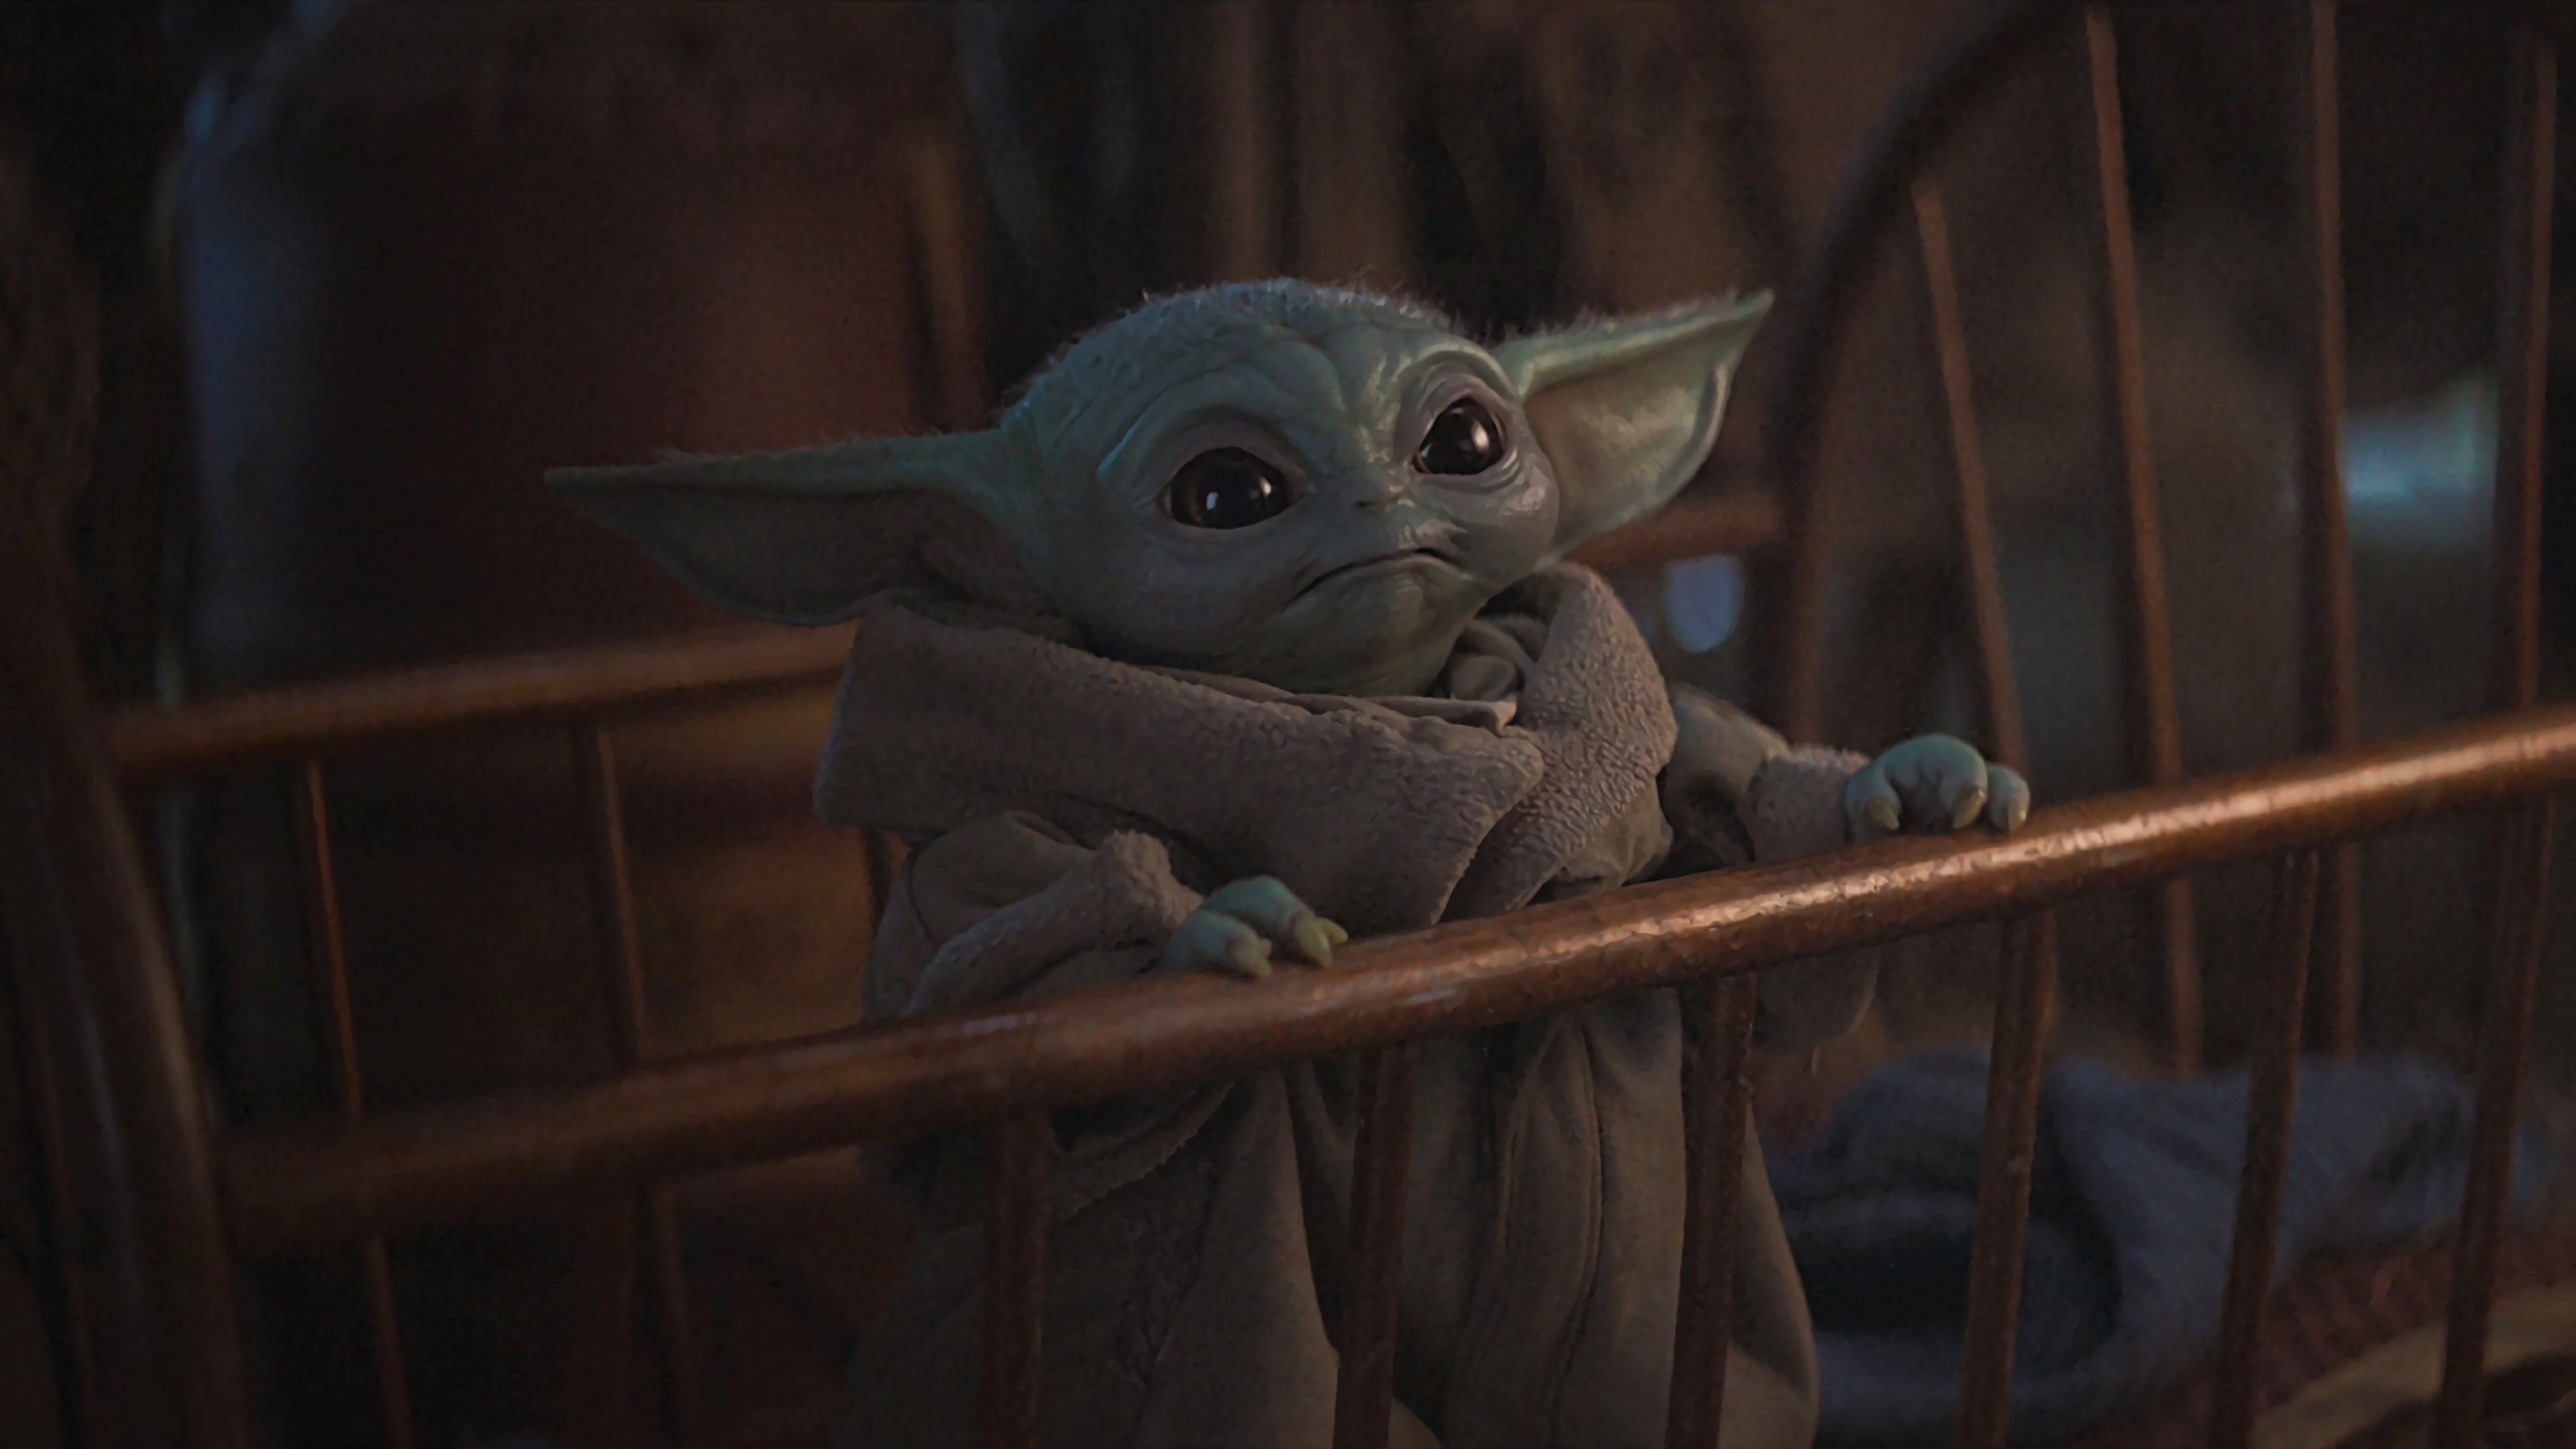  Baby  Yoda  from The Mandalorian Wallpaper  4k  Ultra HD ID 4405